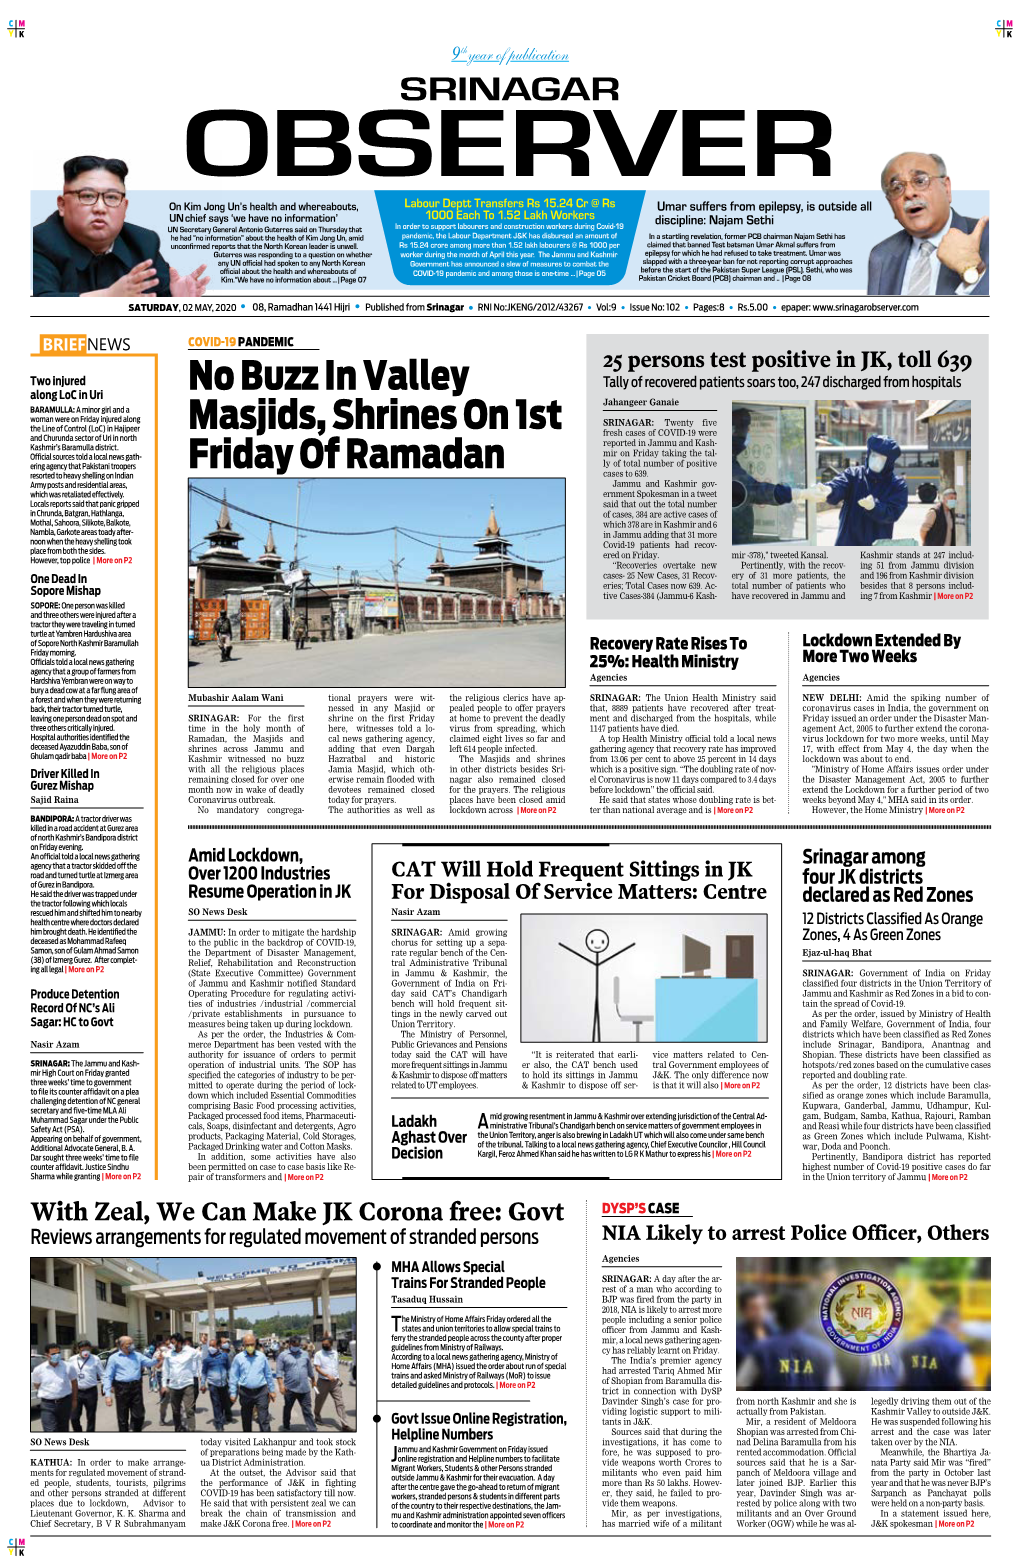 No Buzz in Valley Masjids, Shrines on 1St Friday of Ramadan